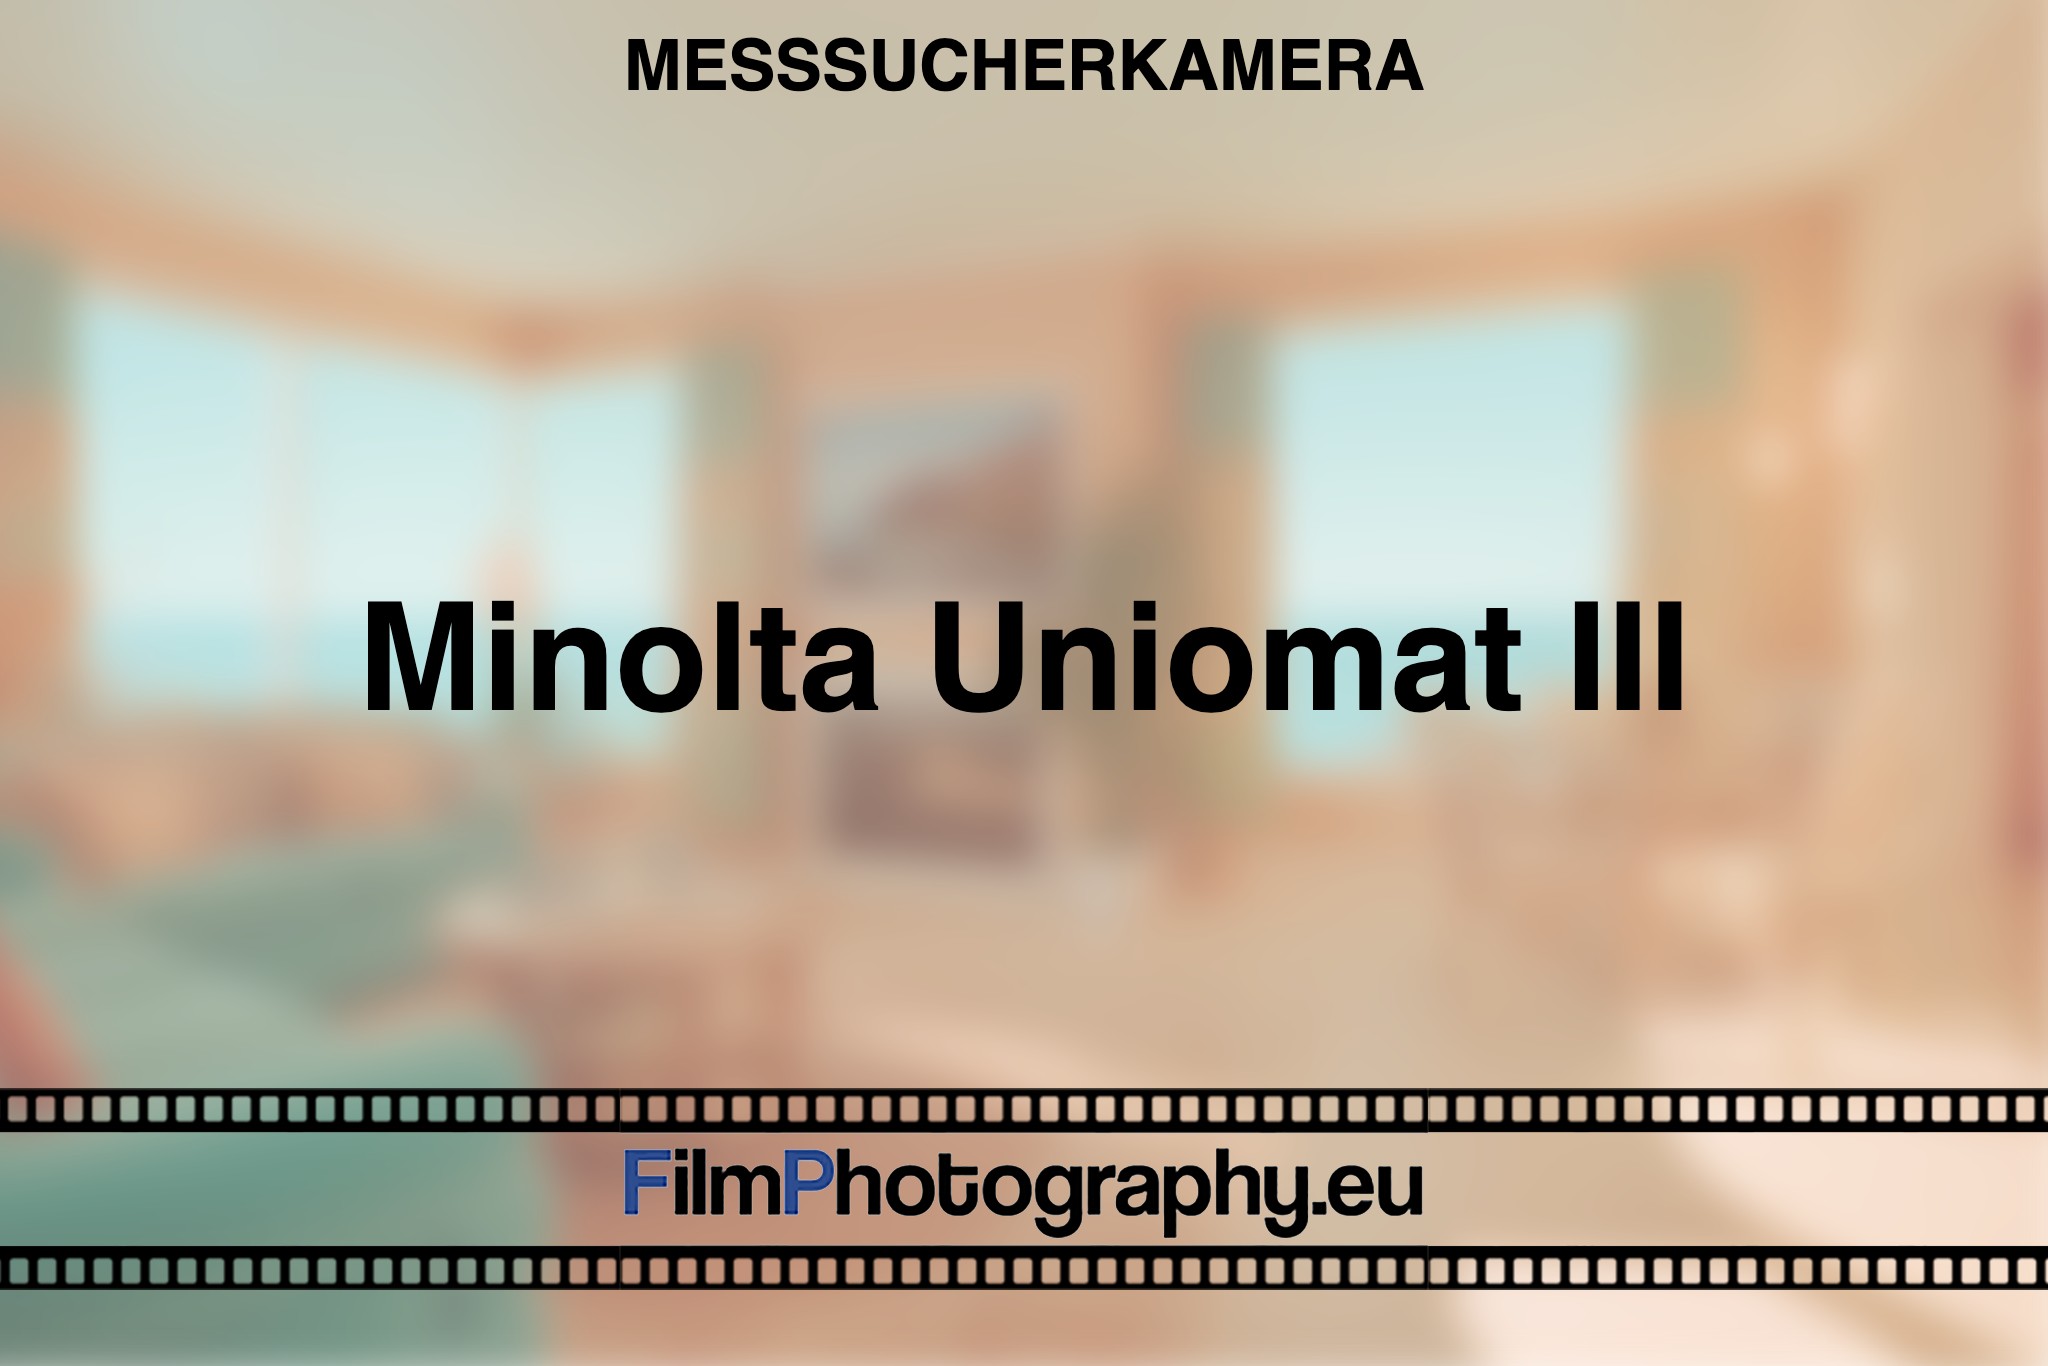 minolta-uniomat-iii-messsucherkamera-bnv